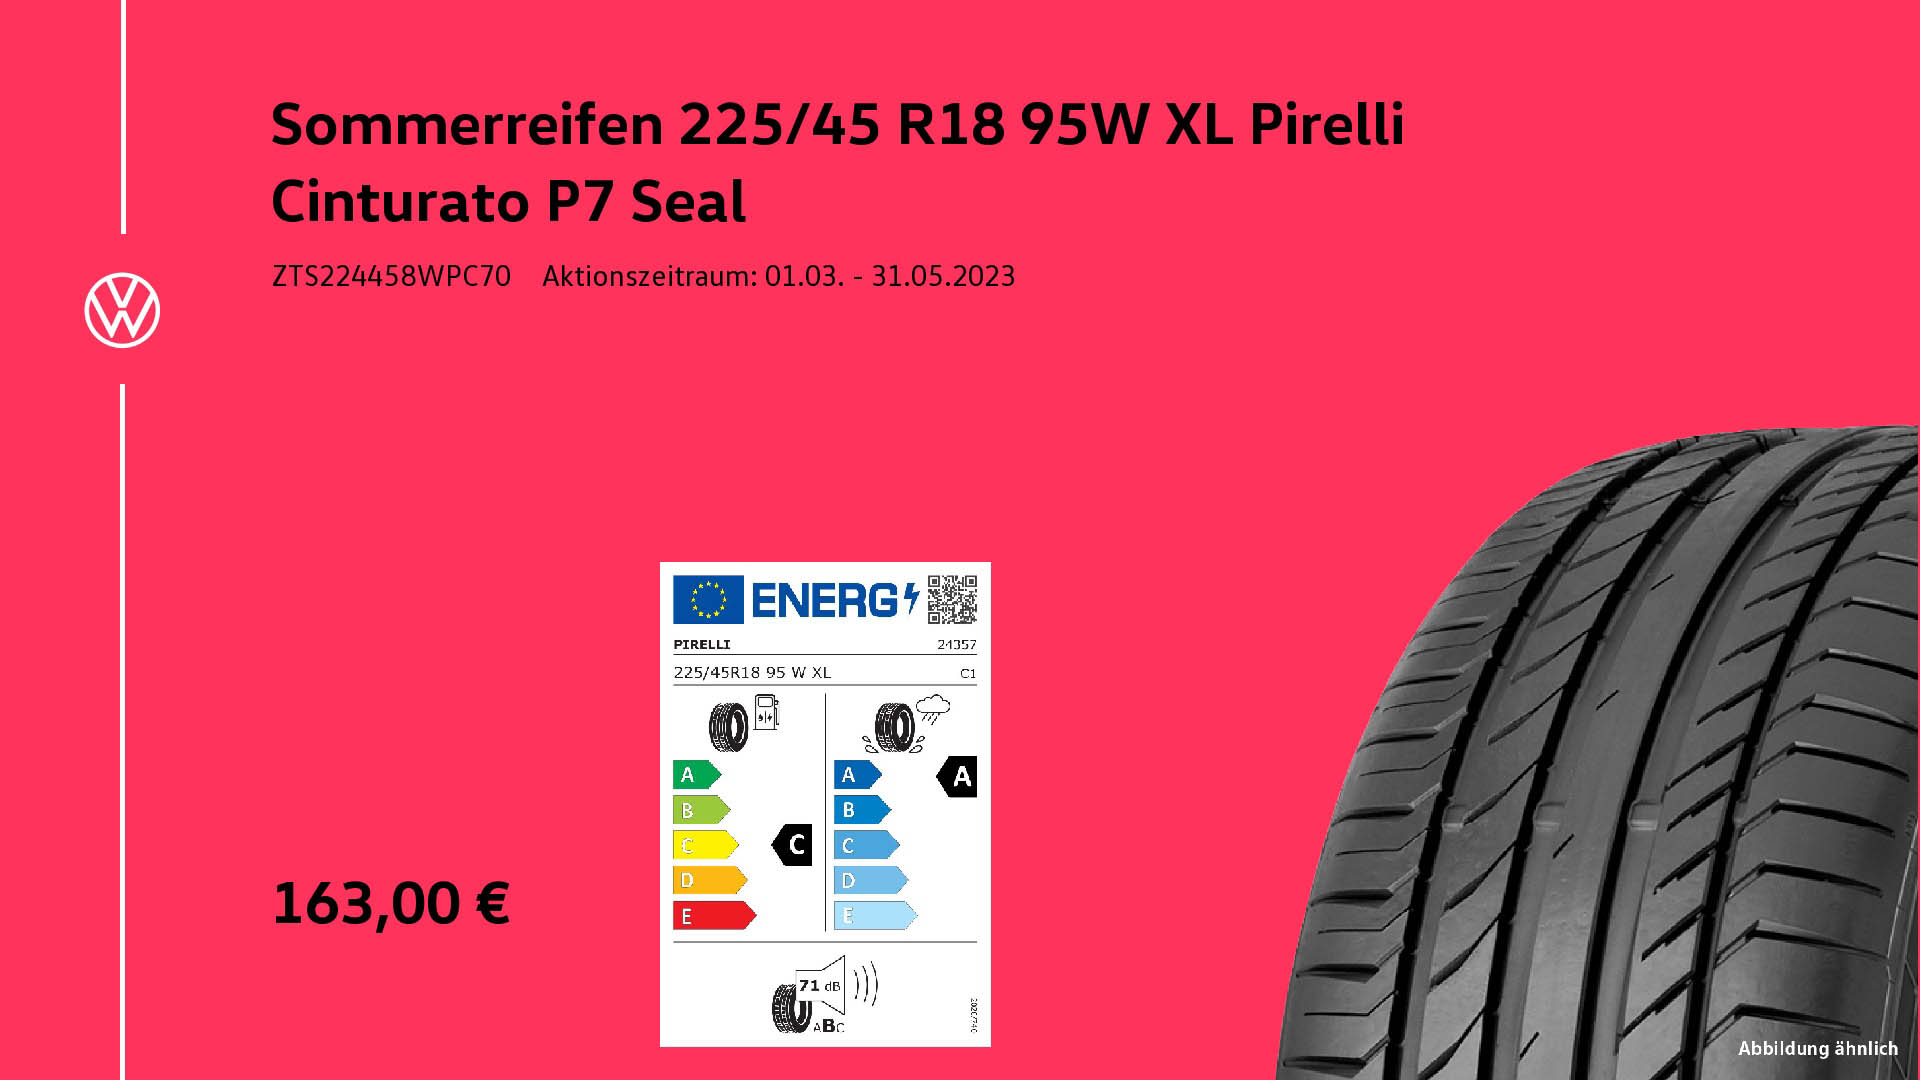 Sommerreifen Pirelli Cintruato P7 Seal257